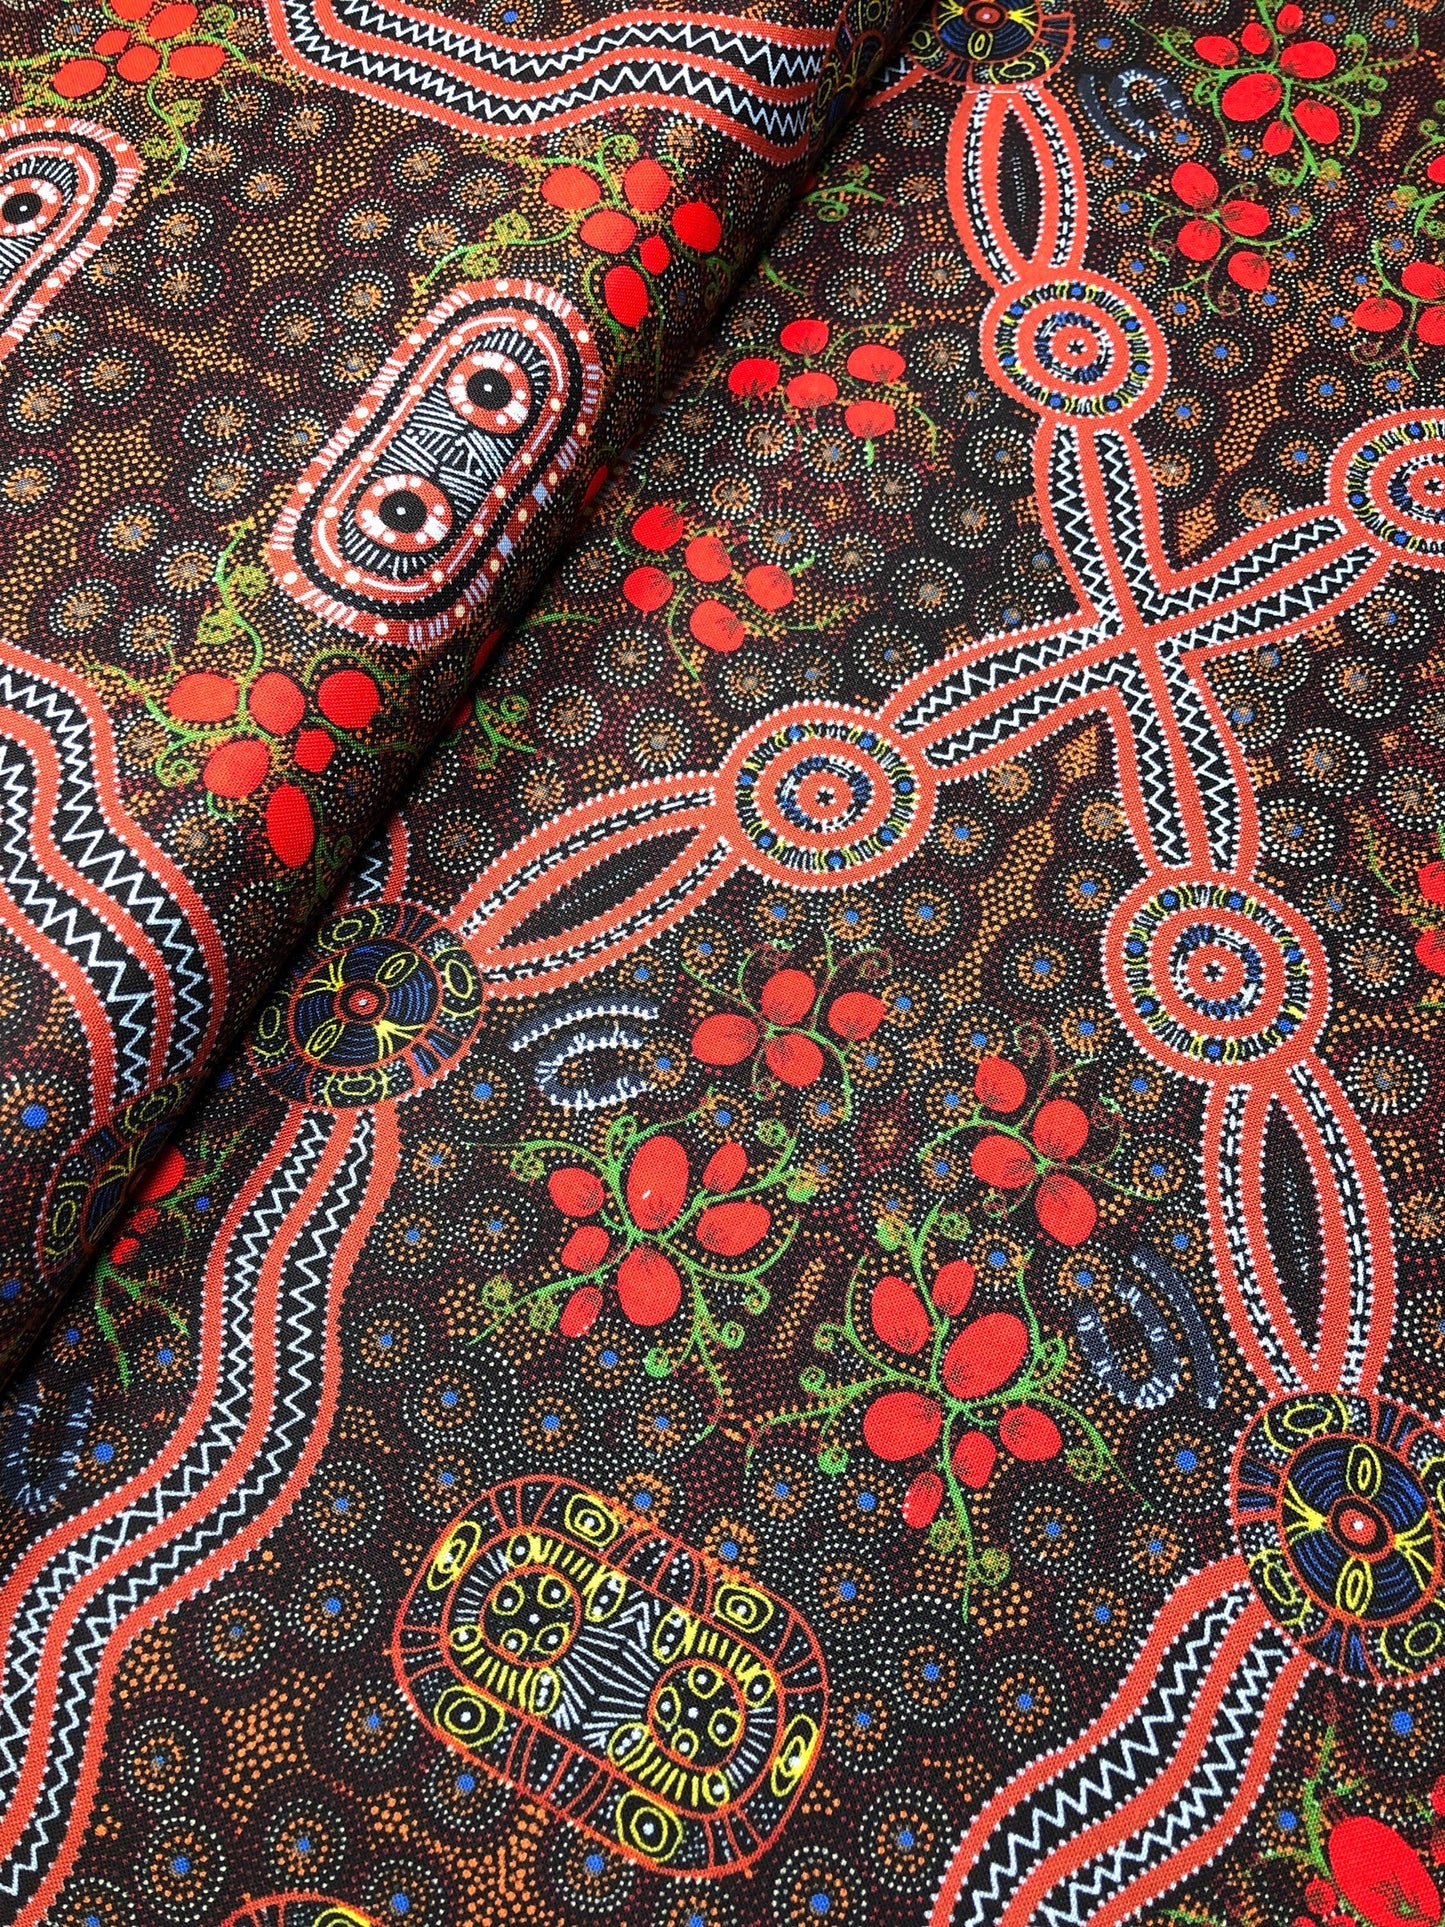 Bush Food Red, Australian Fabric, Quilt Fabric, Cotton Fabric, Aboriginal Fabric, Quilting Fabric, Fiber Art, Australia, Fabric By The Yard